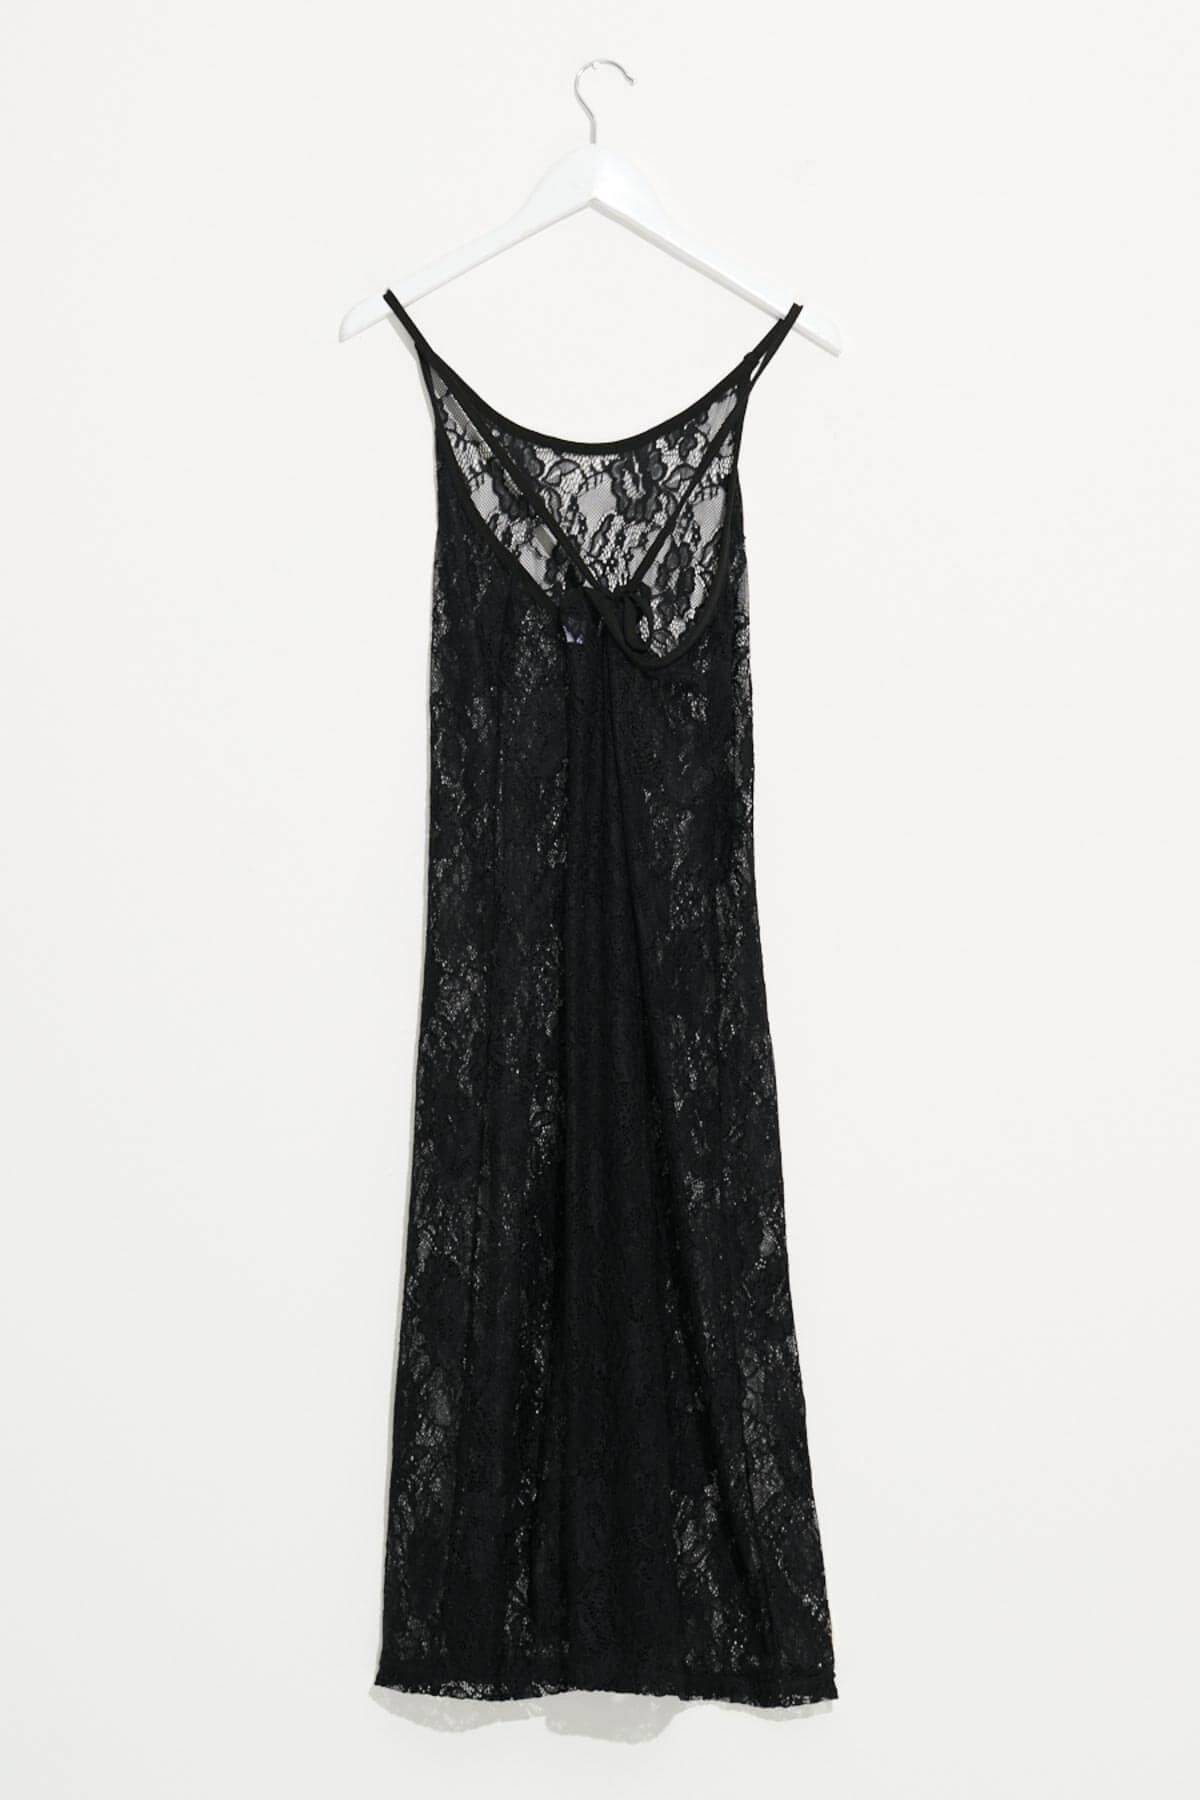 Misfit Shapes - Sacred Lace Midi Dress - Black